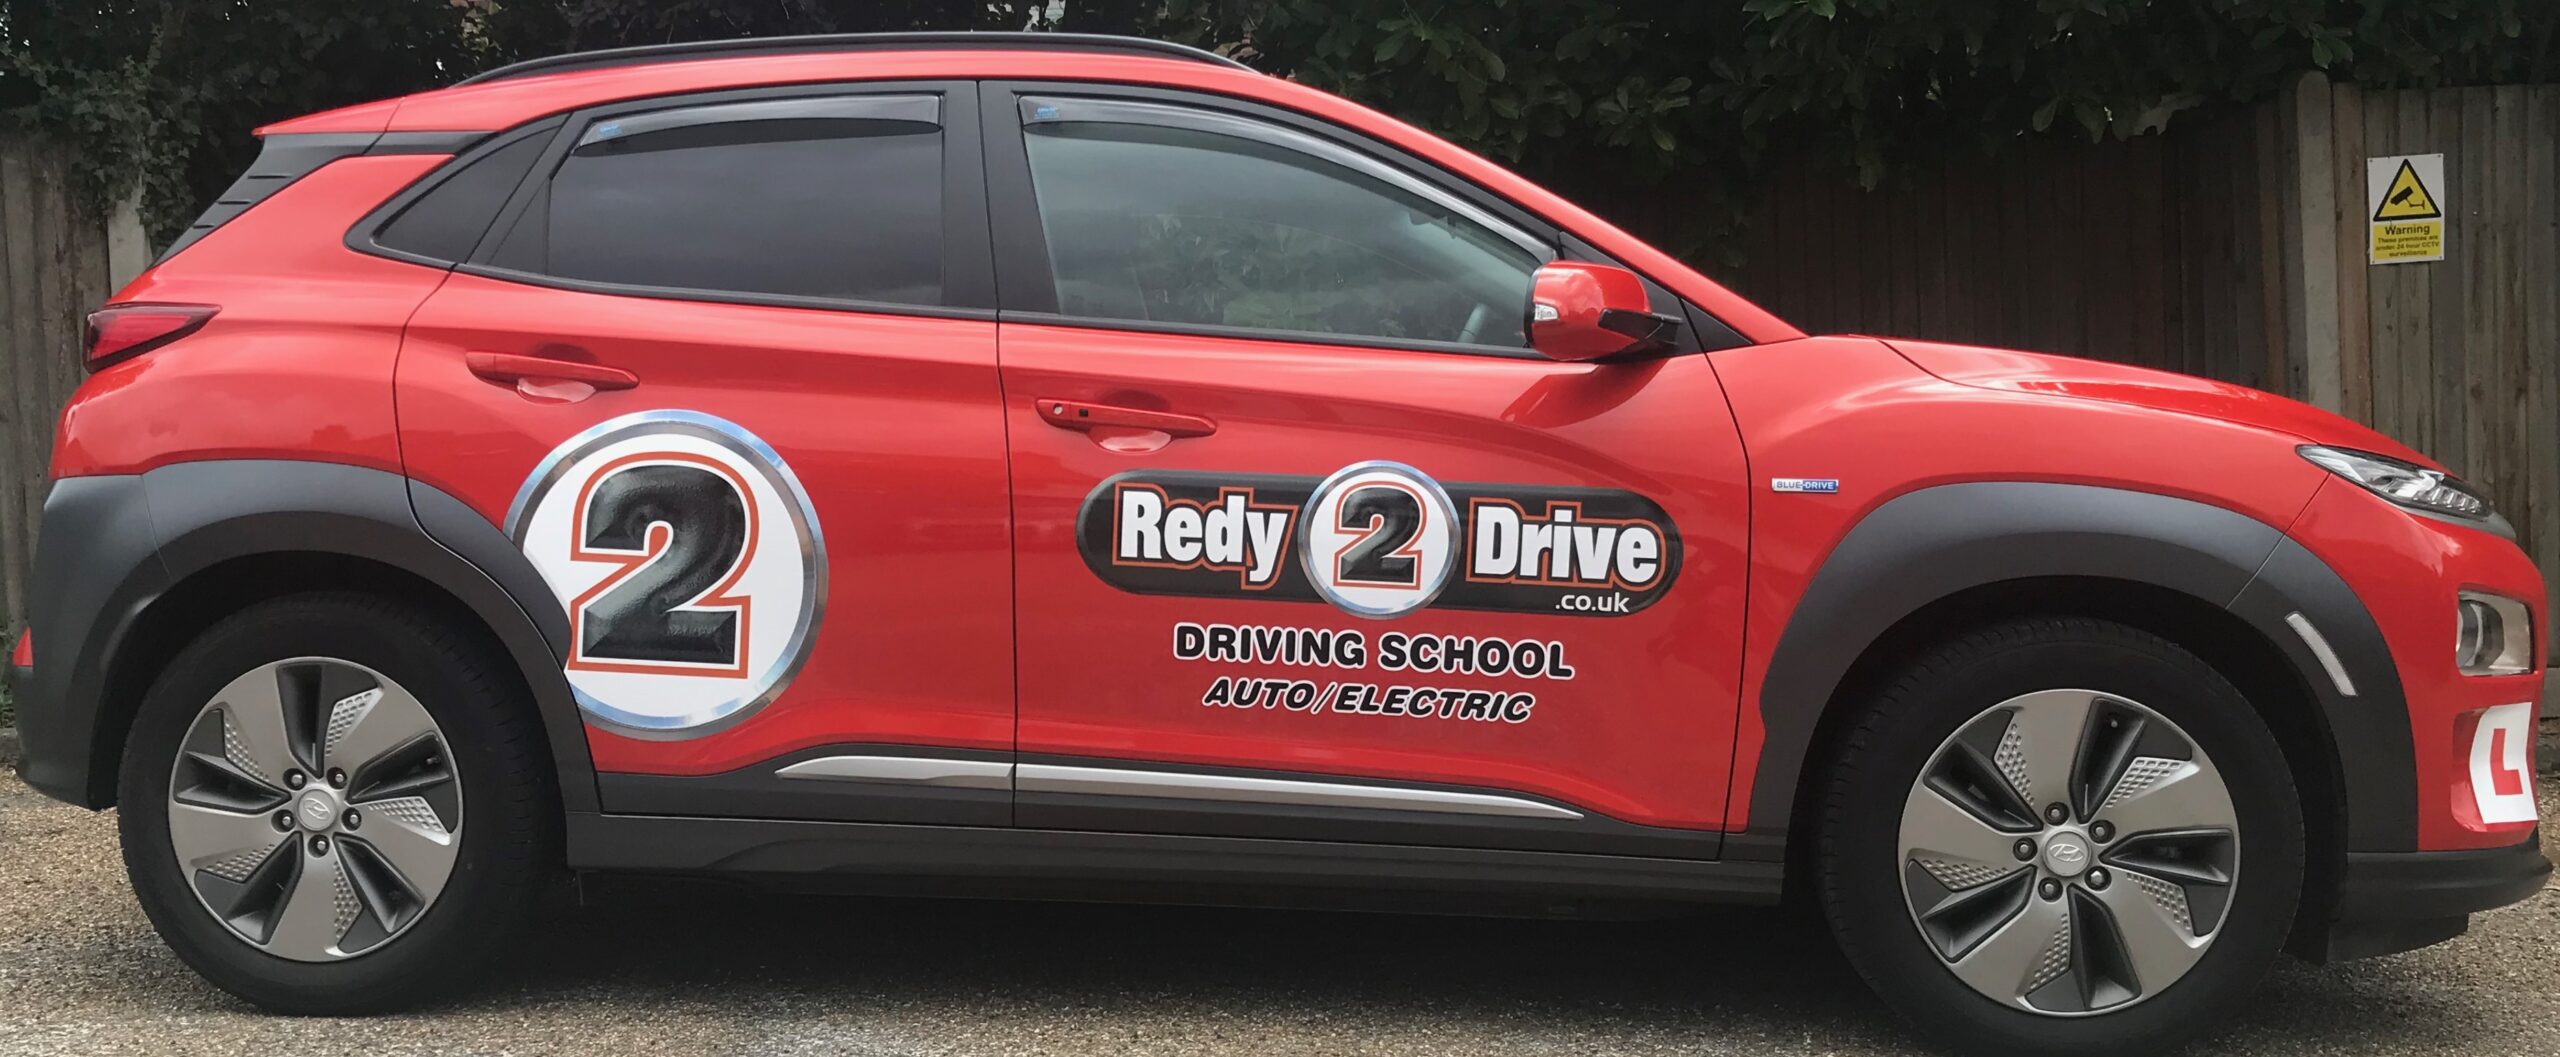 Electric Driving School